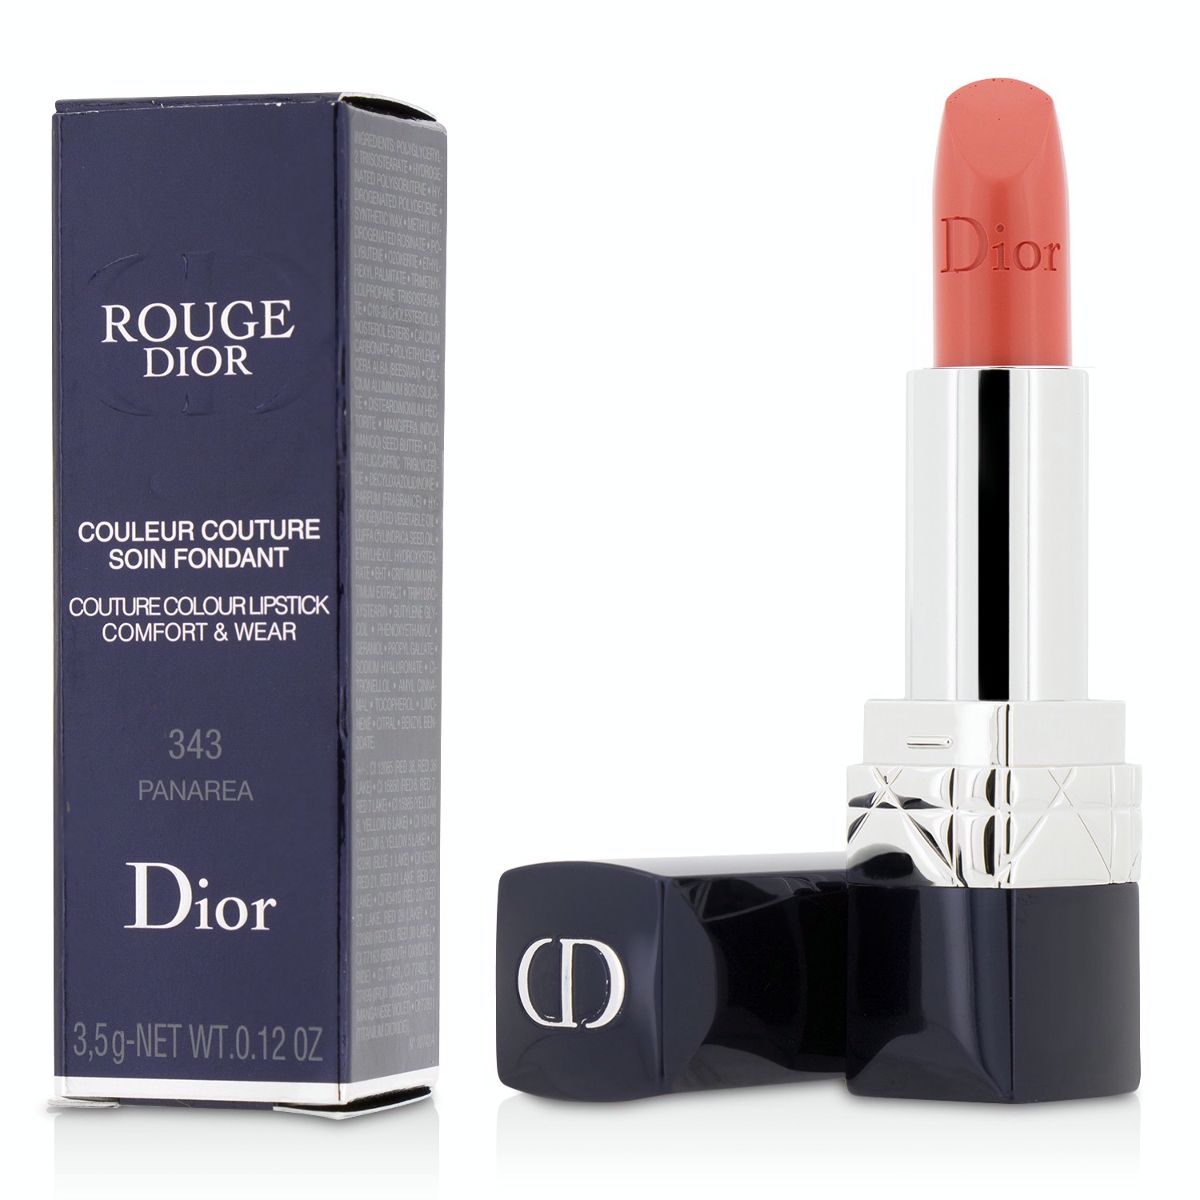 Rouge Dior Couture Colour Comfort  Wear Lipstick - # 343 Panarea Christian Dior Image